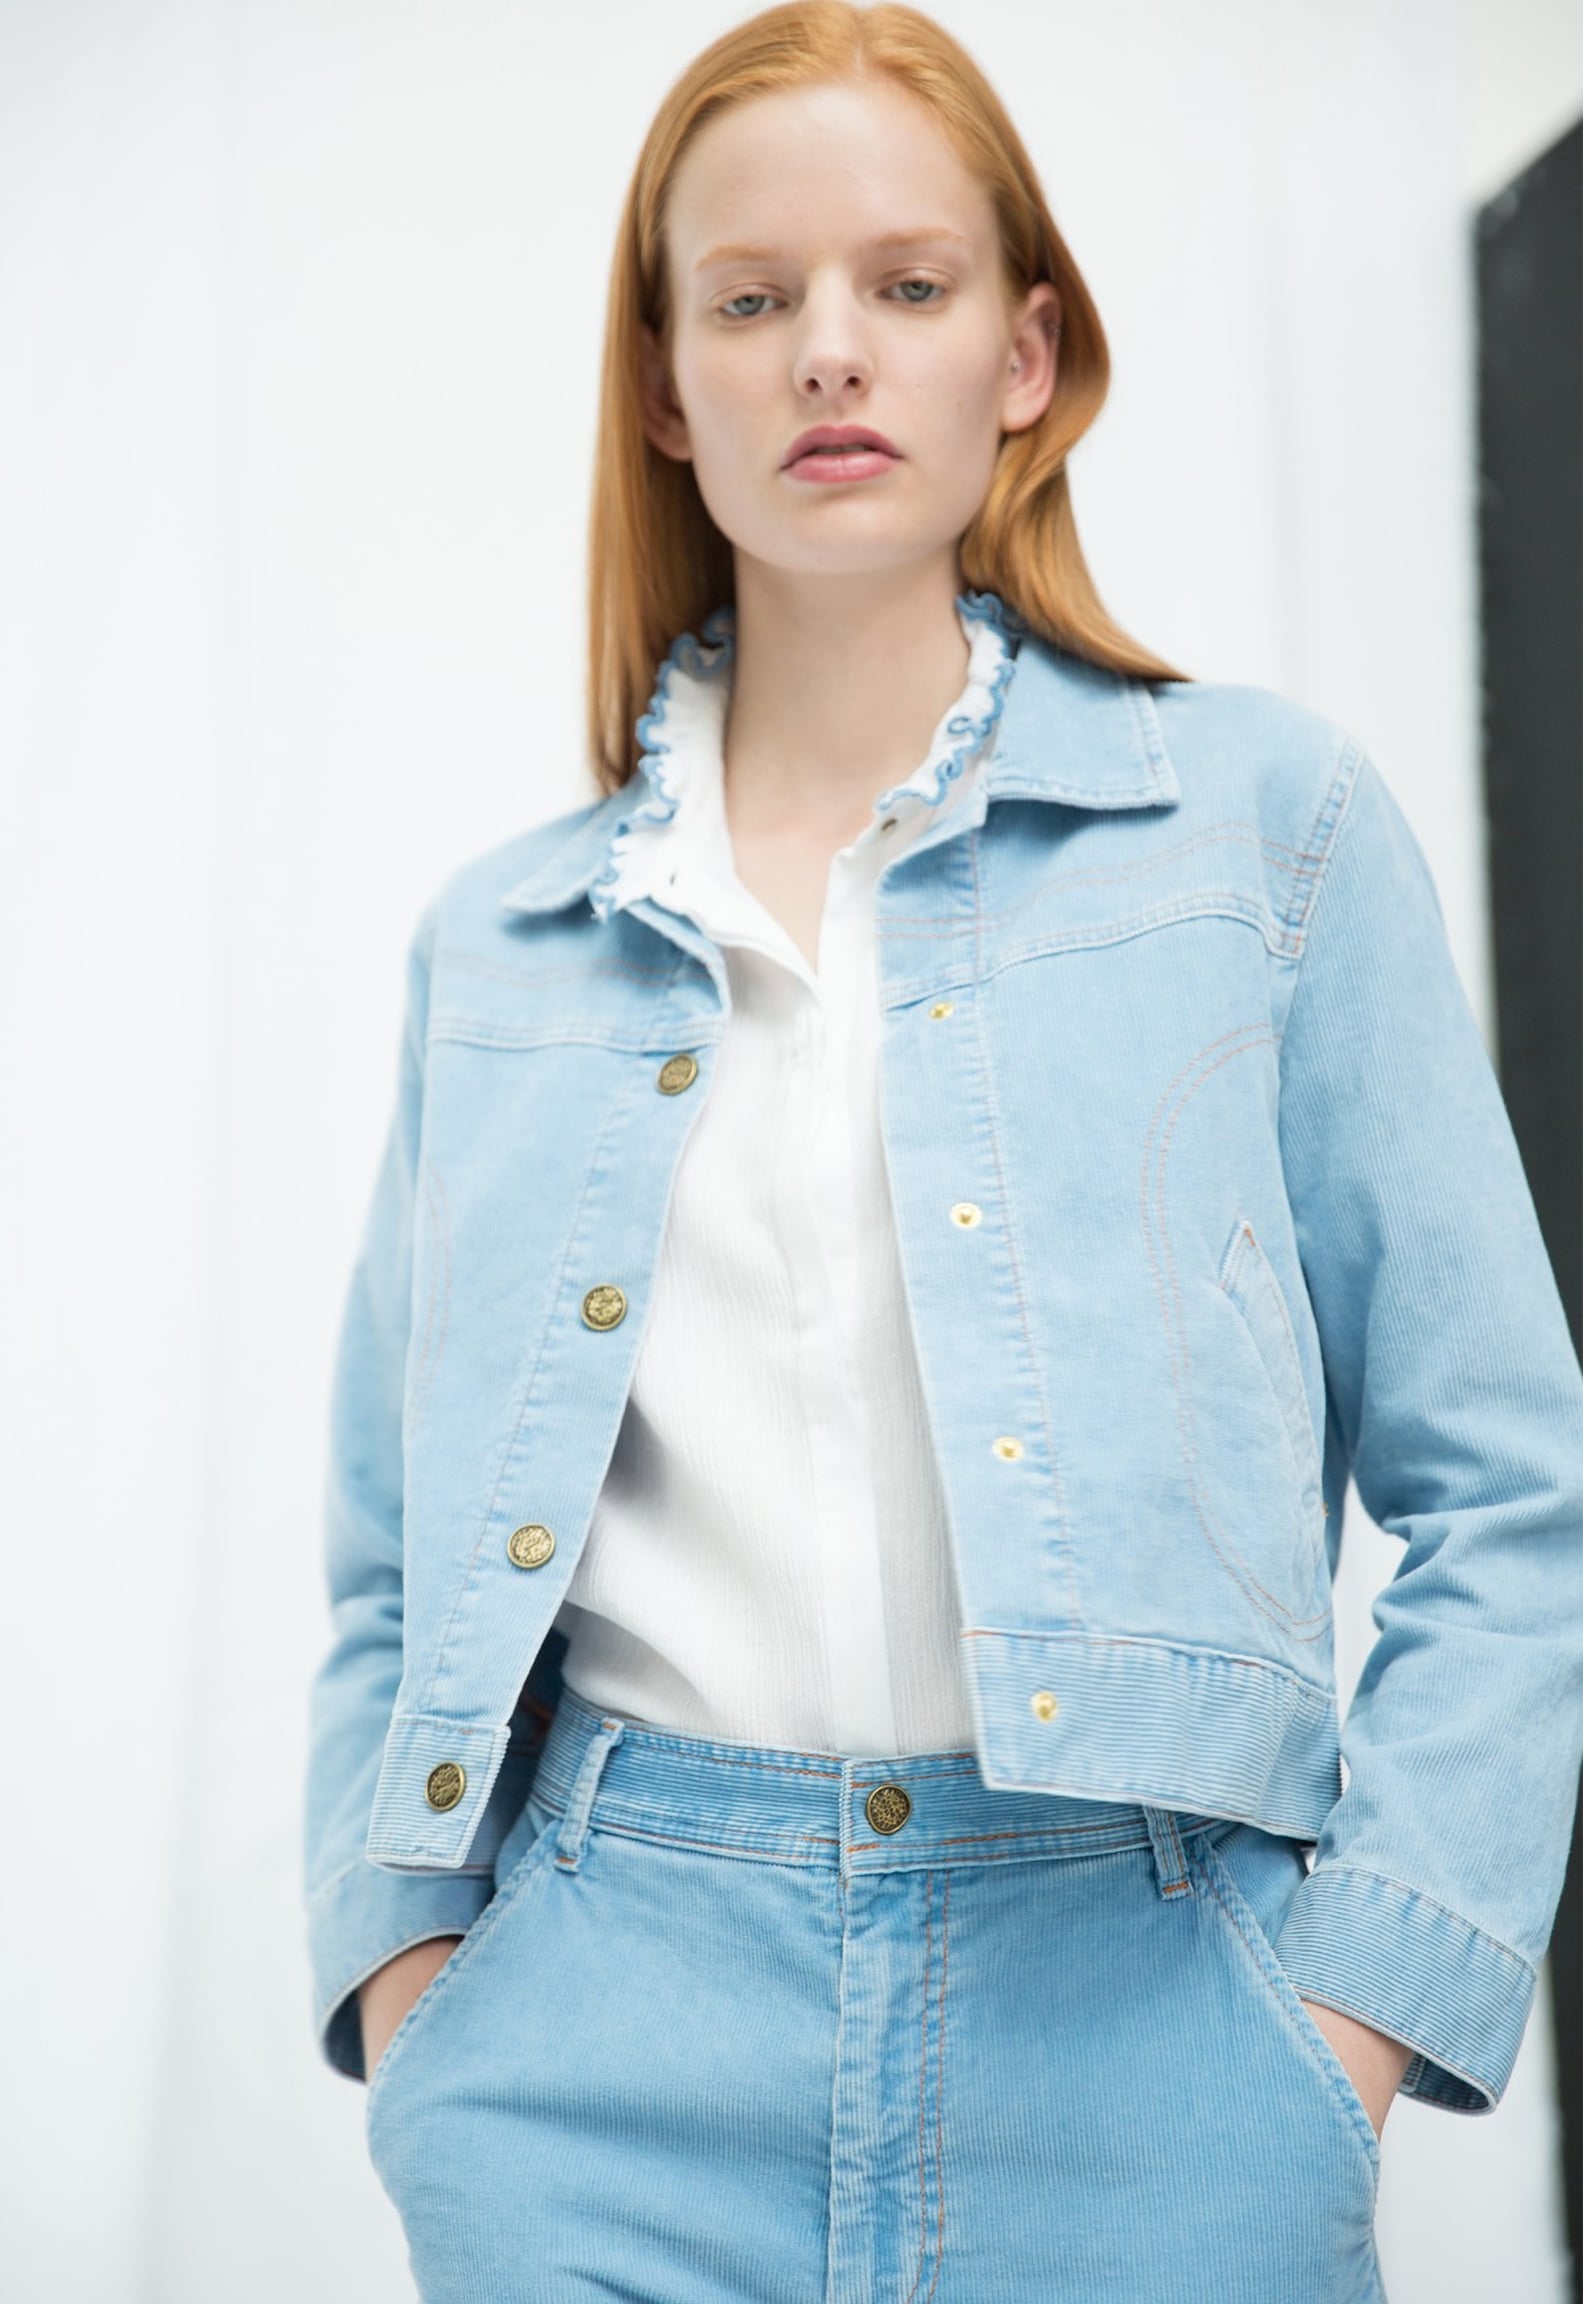 How to Dress Up a Jean Jacket | POPSUGAR Fashion